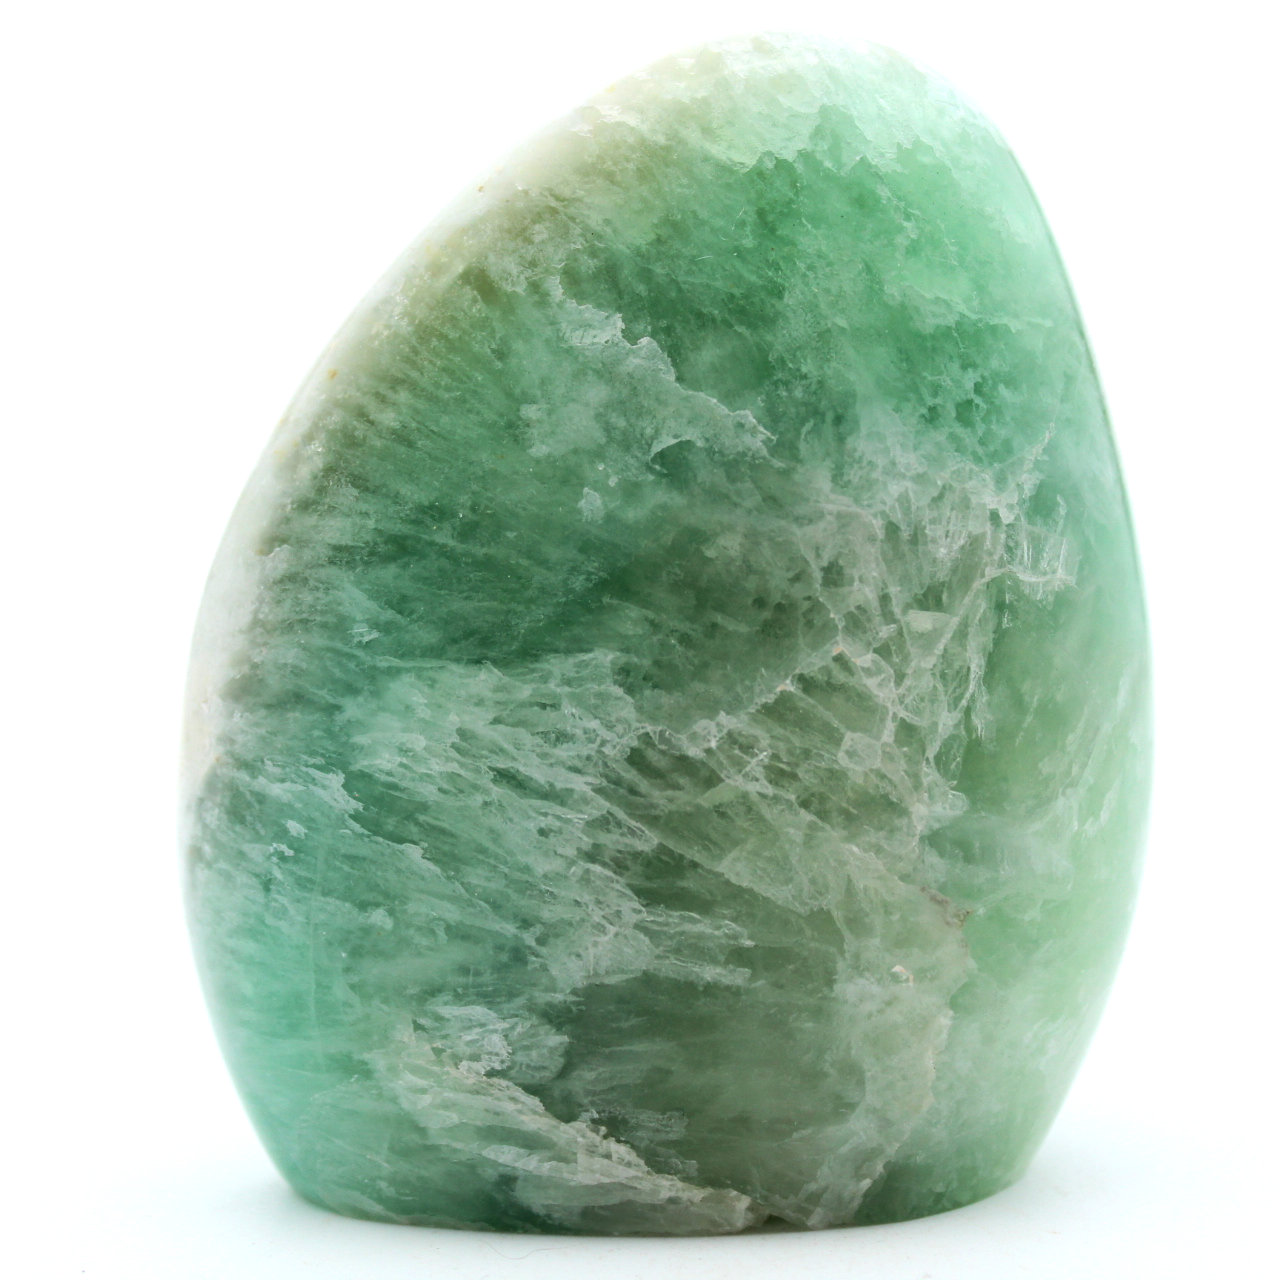 Pedra de fluorita verde de forma livre